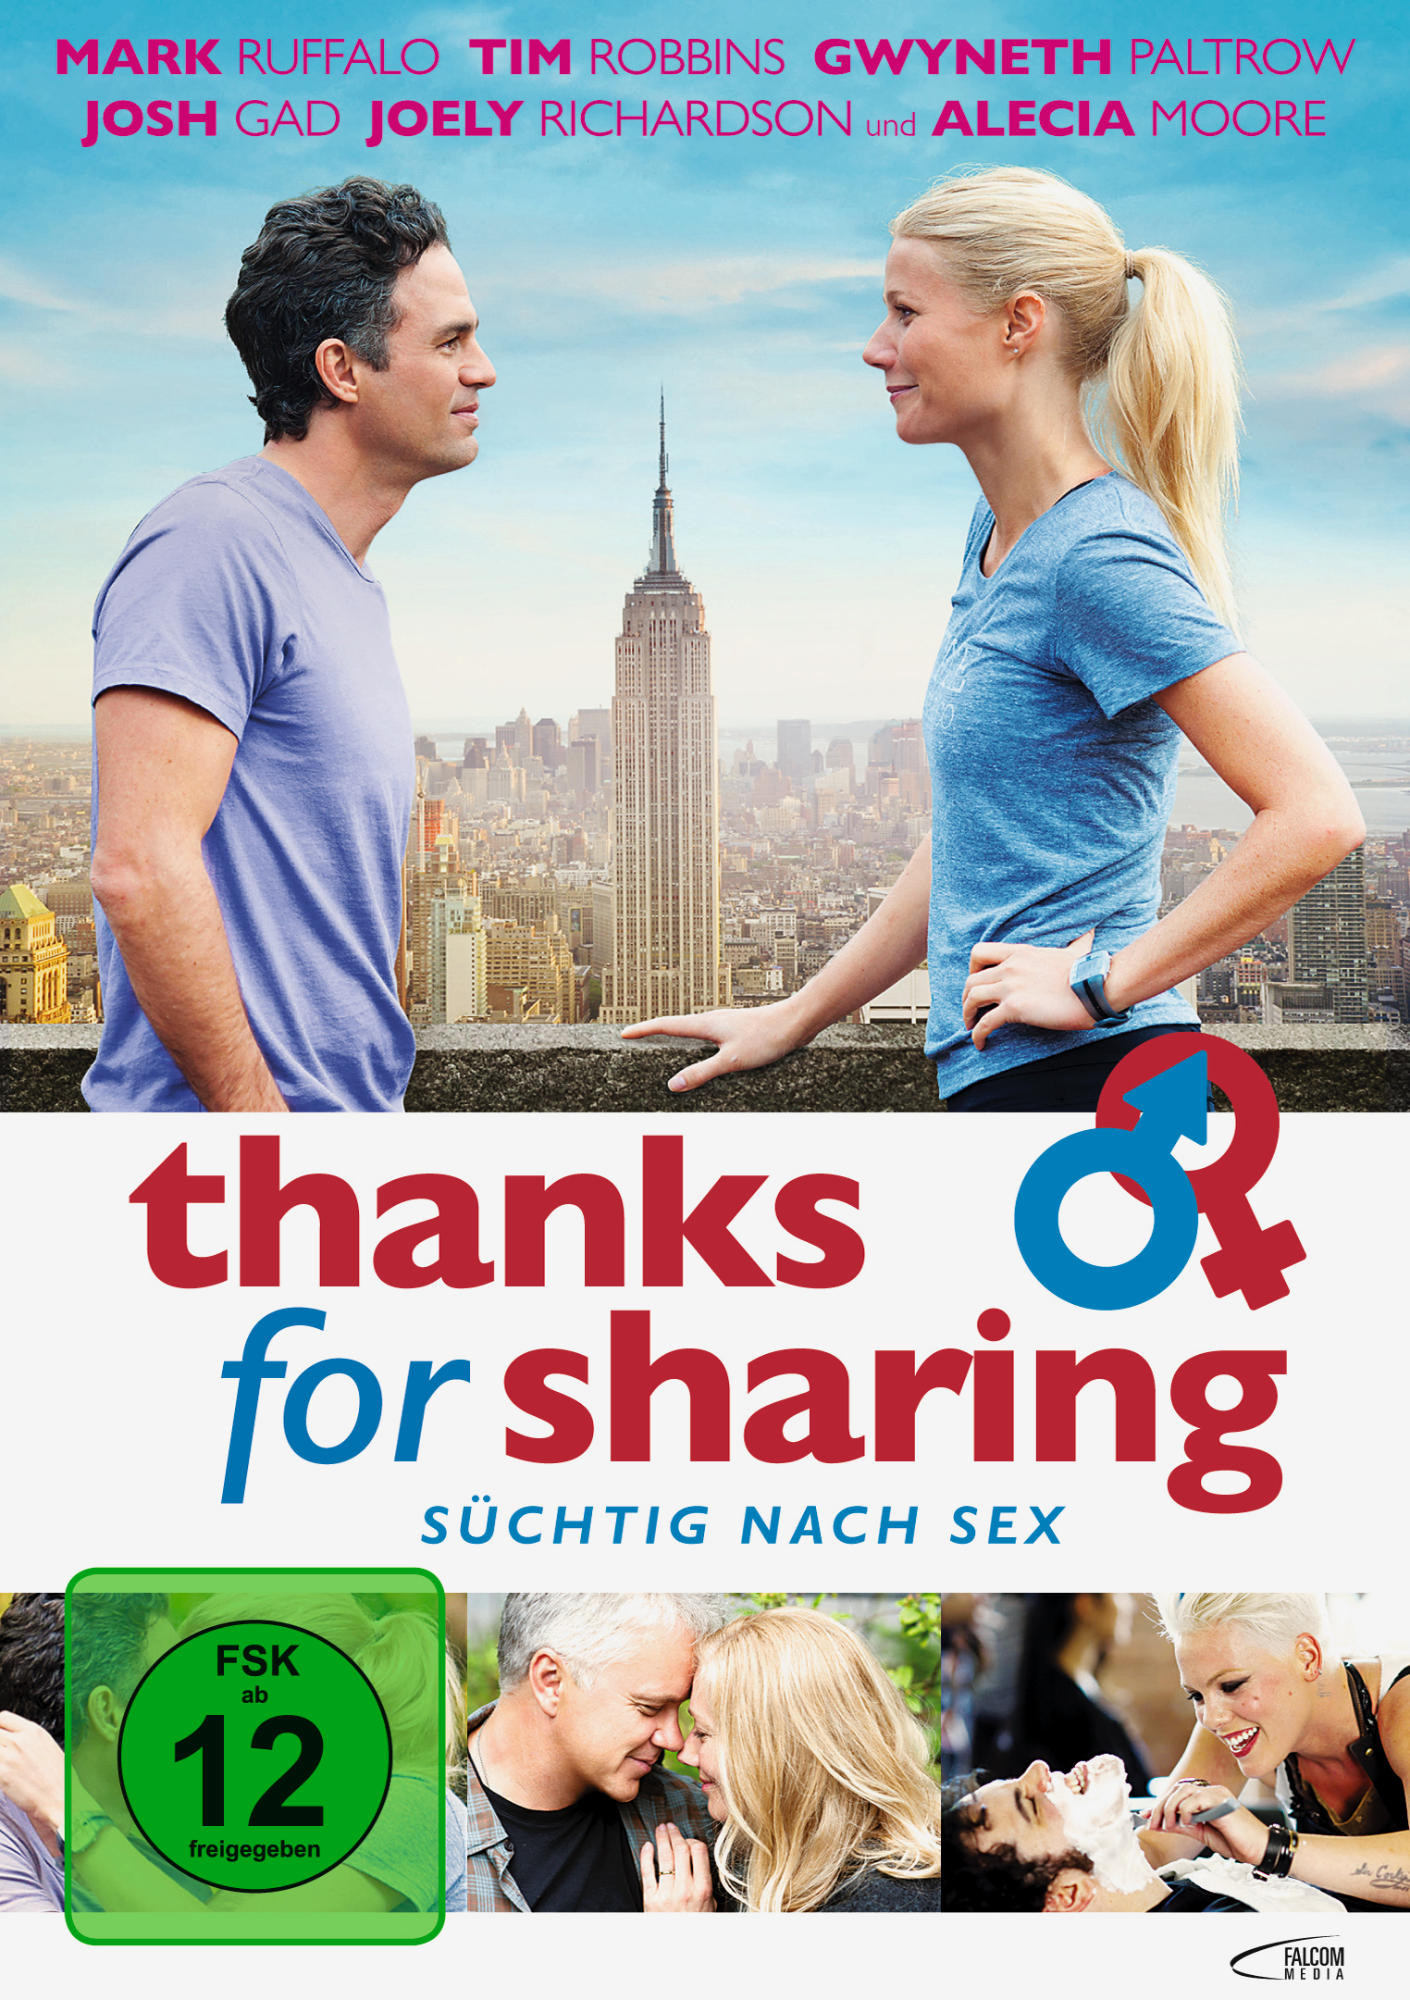 FOR NACH SEX DVD SHARING SÜCHTIG - THANKS